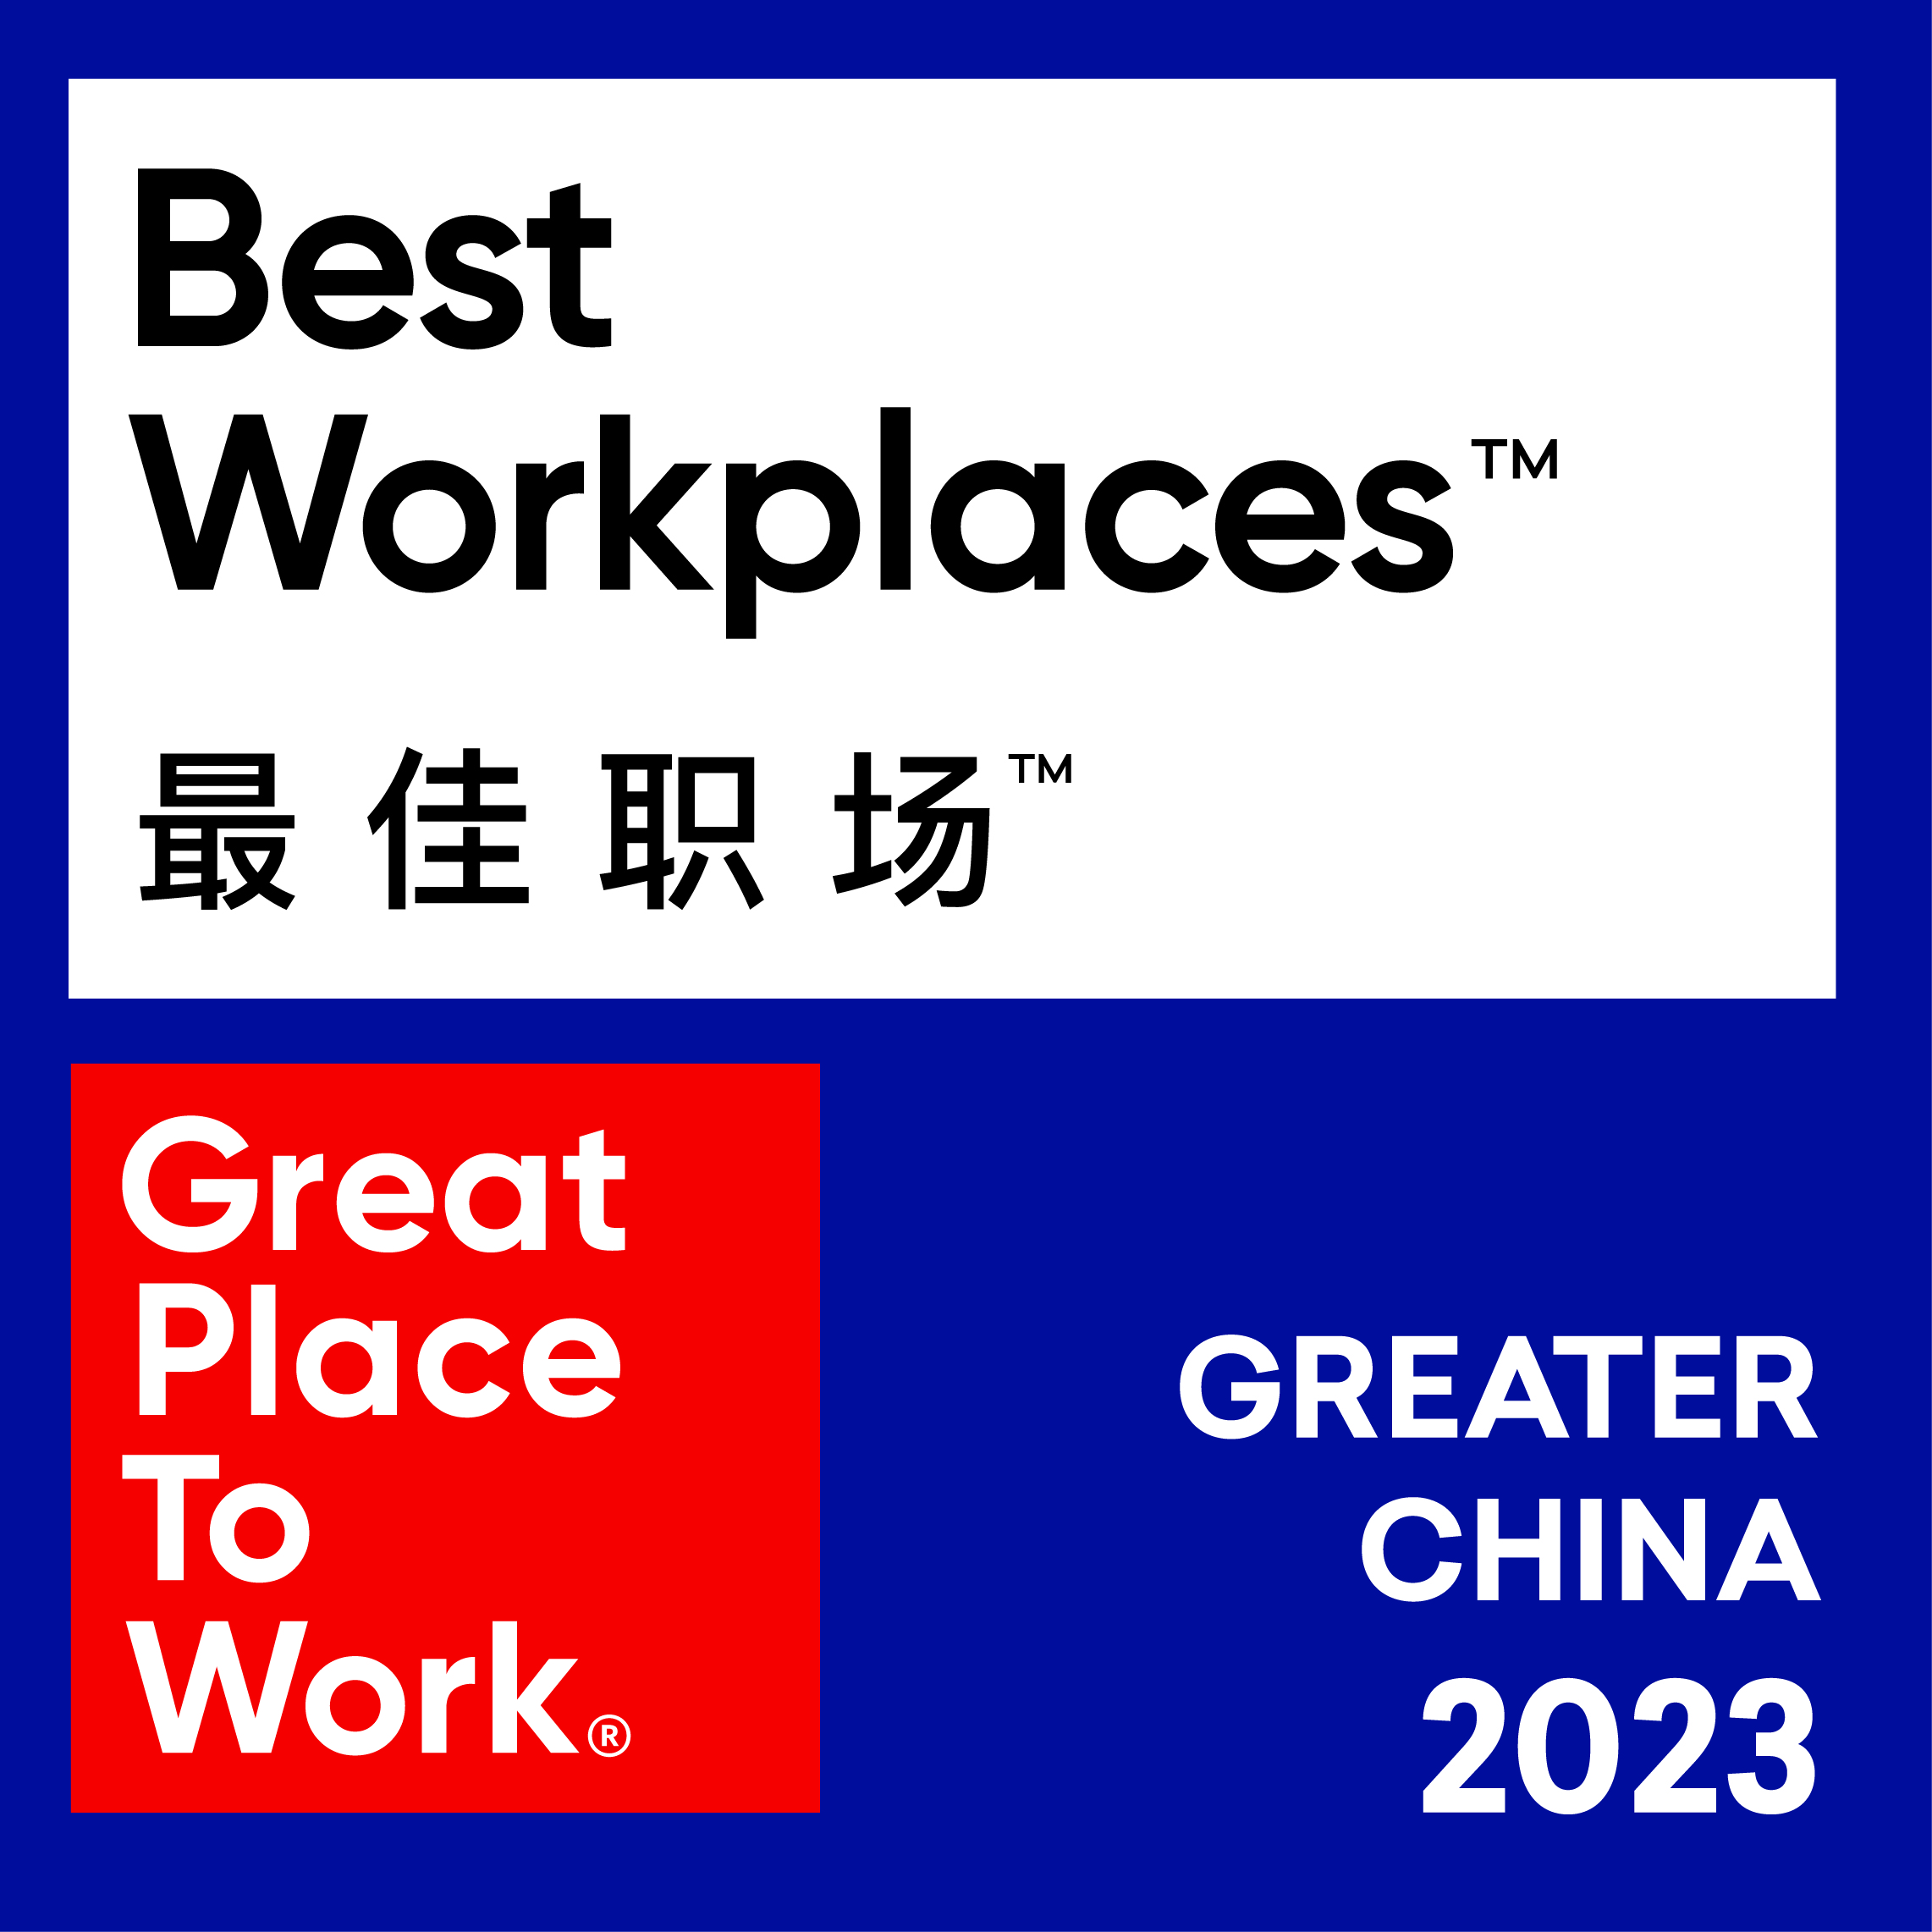 GPTW Greater China Award 2023 Logo